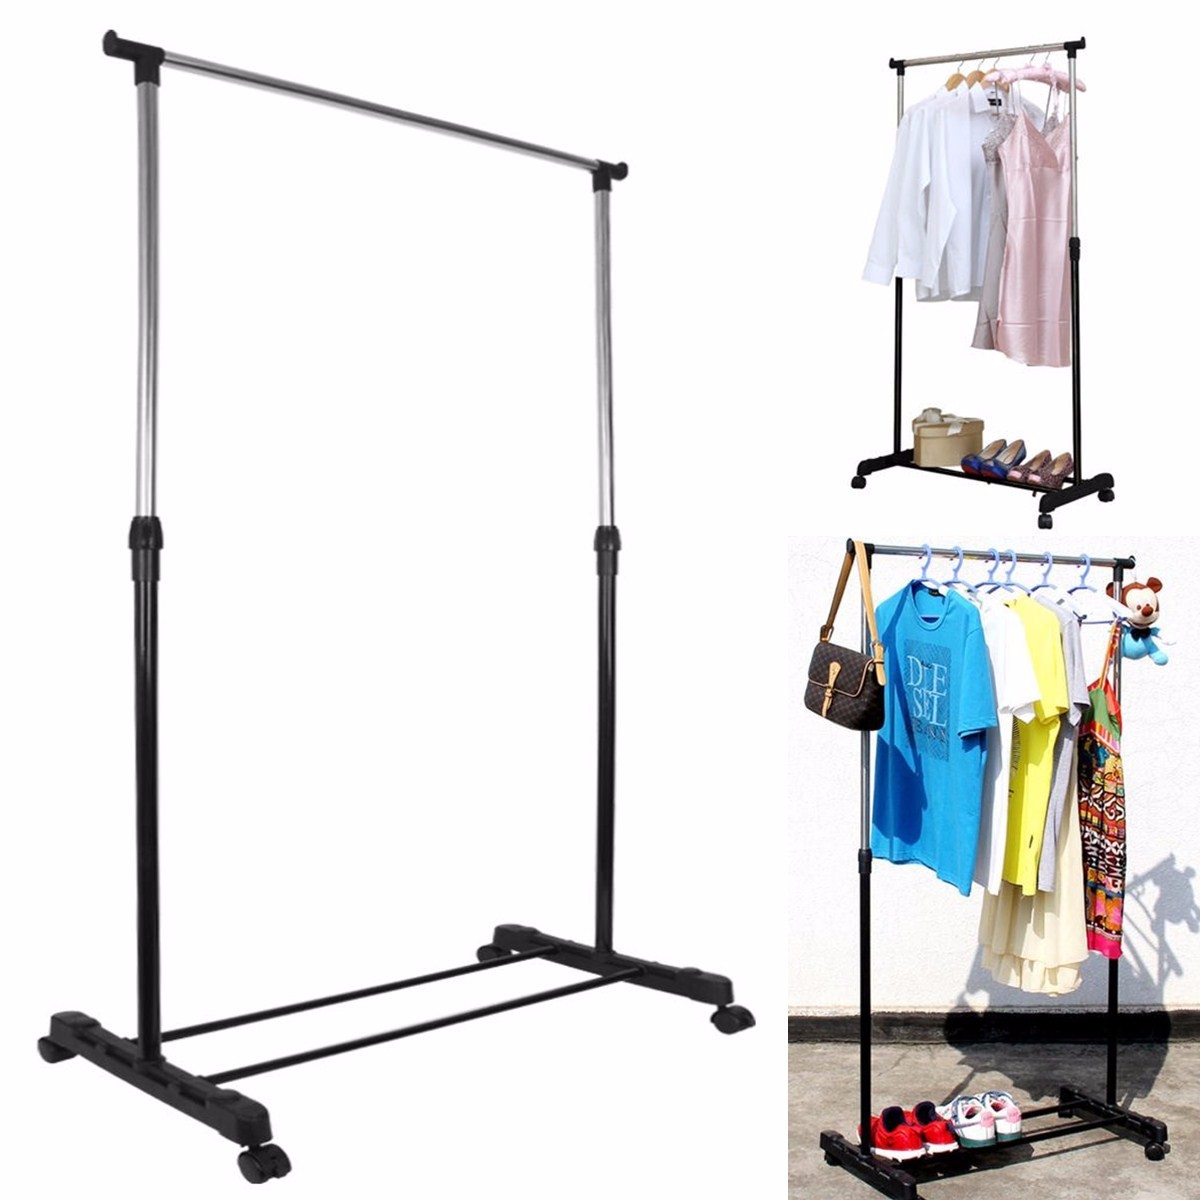 

Adjustable Portable Clothes Garment Rack Hanging Rail Rolling Wheel Heavy Duty Cloth Hanger